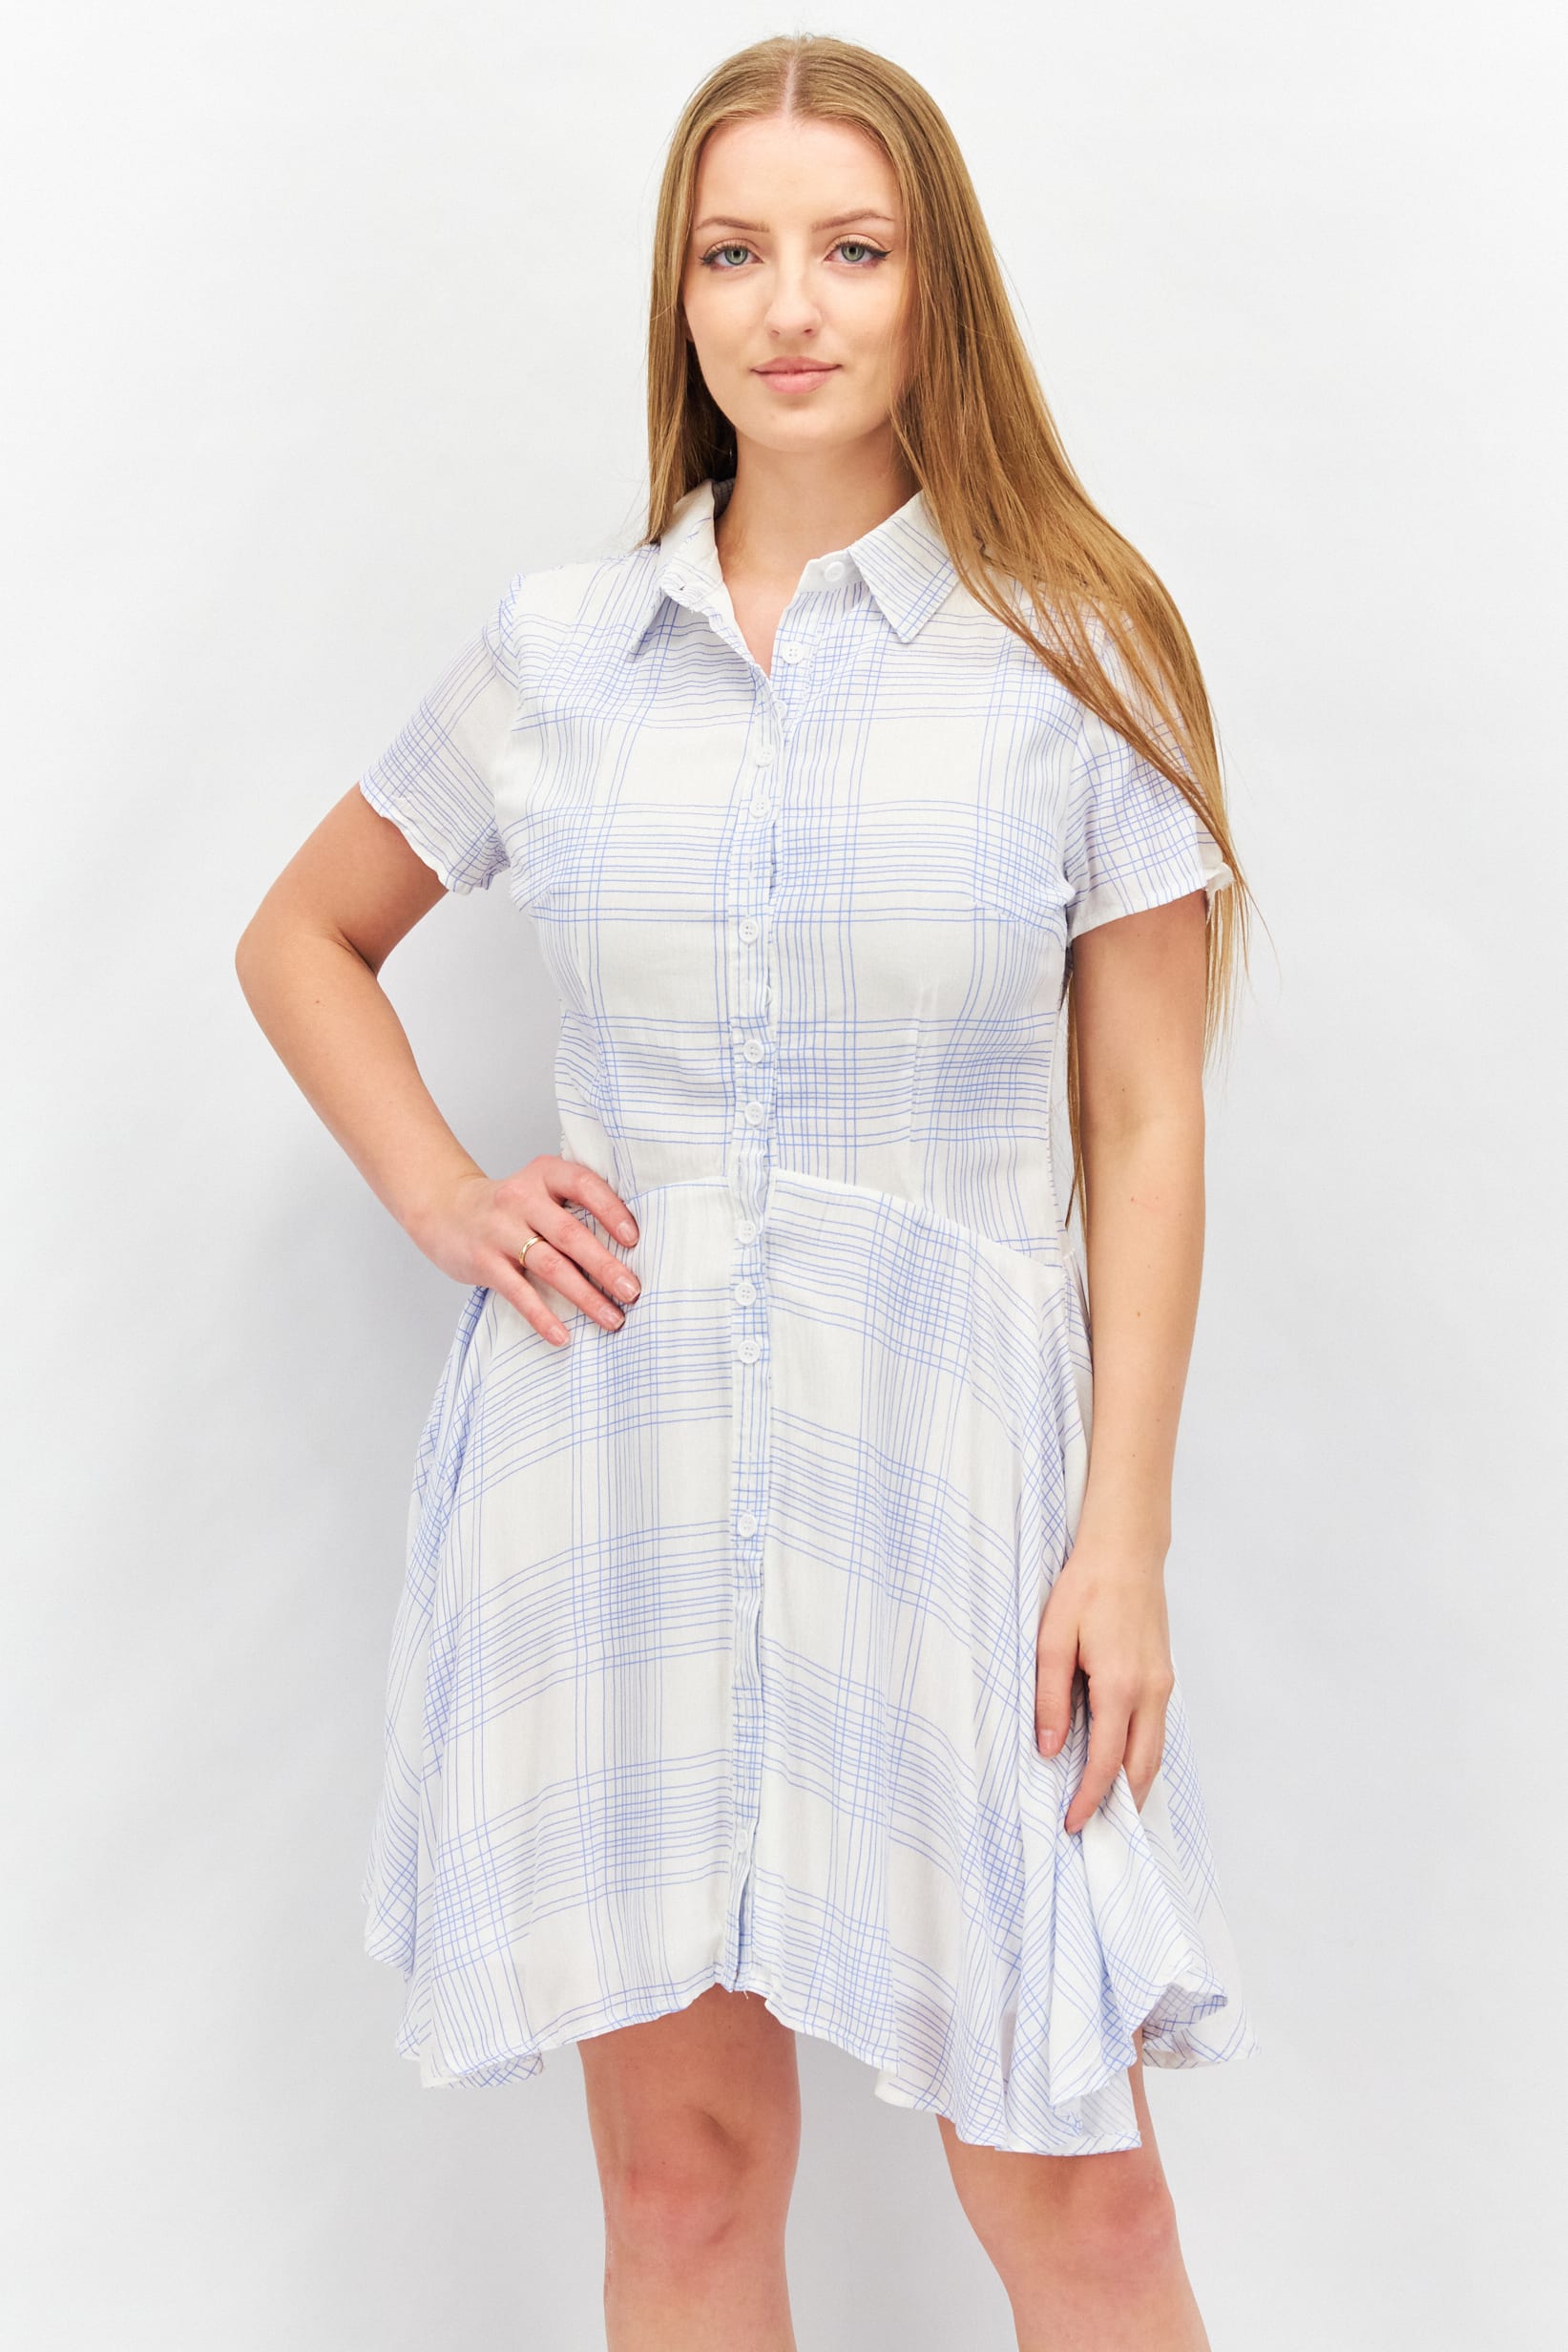 Missguided Women's White/Blue Shirt  Dress AMF1039(S7) shr